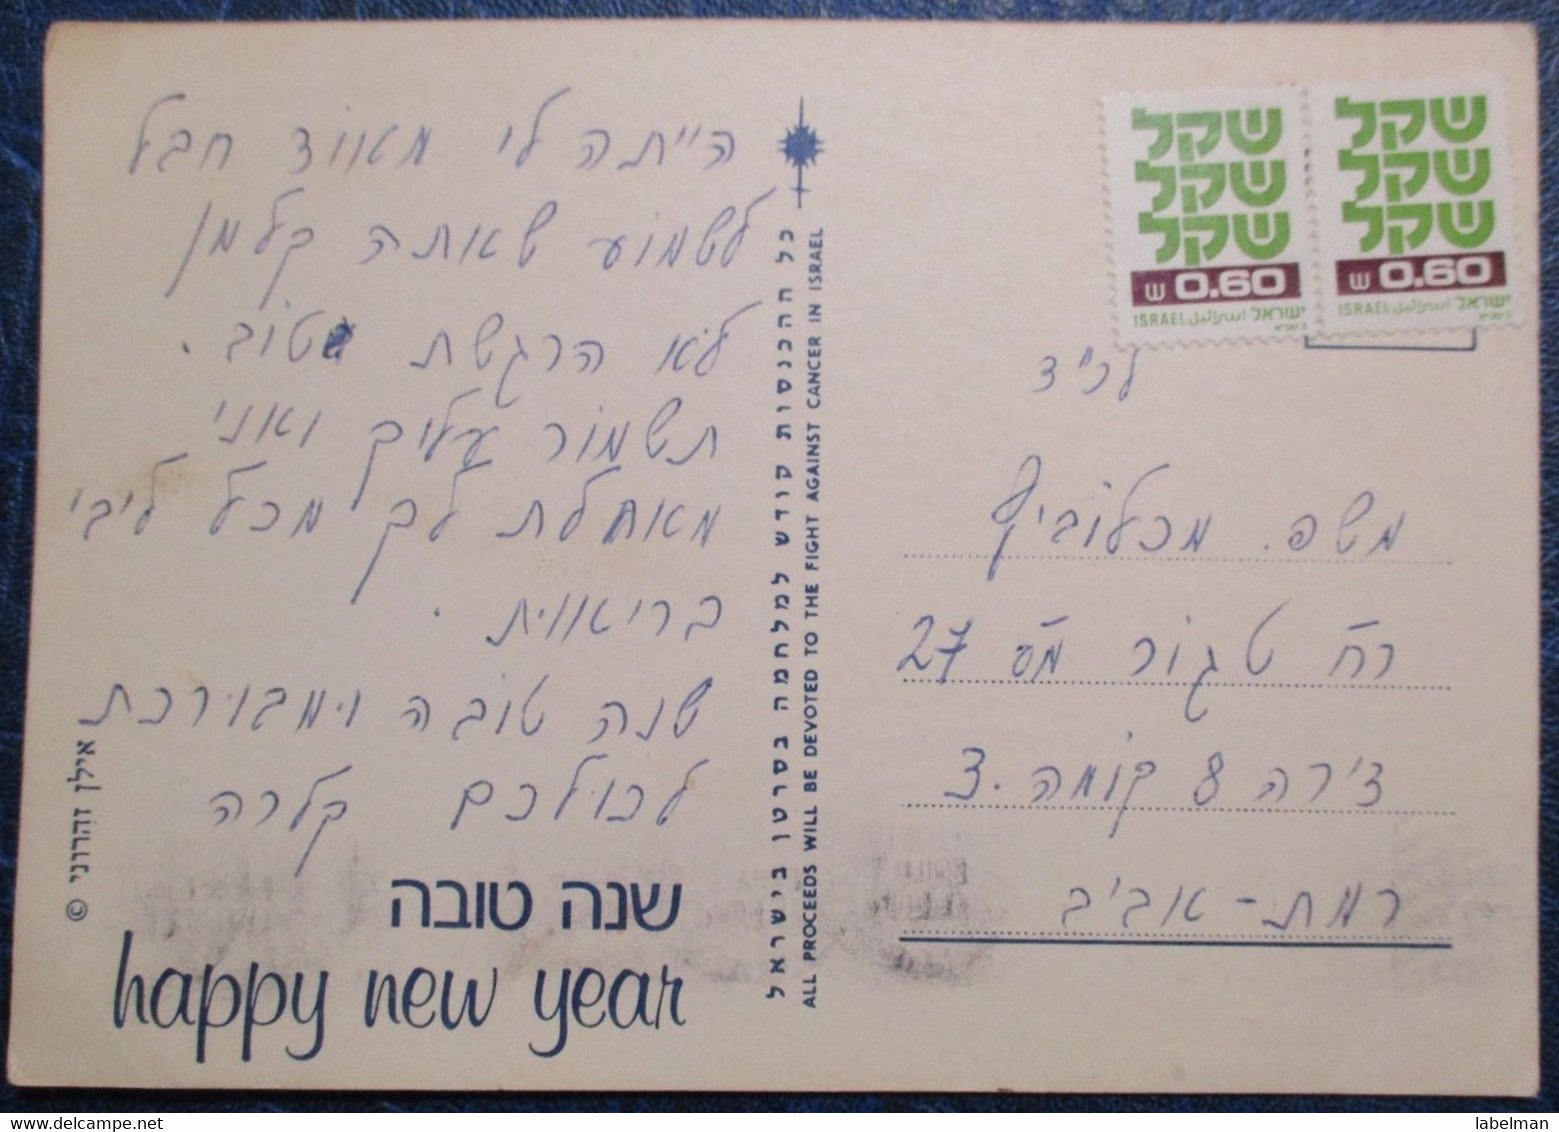 ISRAEL FIGHT CANCER ASSOCIATION SHANA TOVA NEW YEAR JUDAICA PC ILAN ZAARONI GILAD CARD POSTCARD CARTOLINA ANSICHTSKARTE - New Year